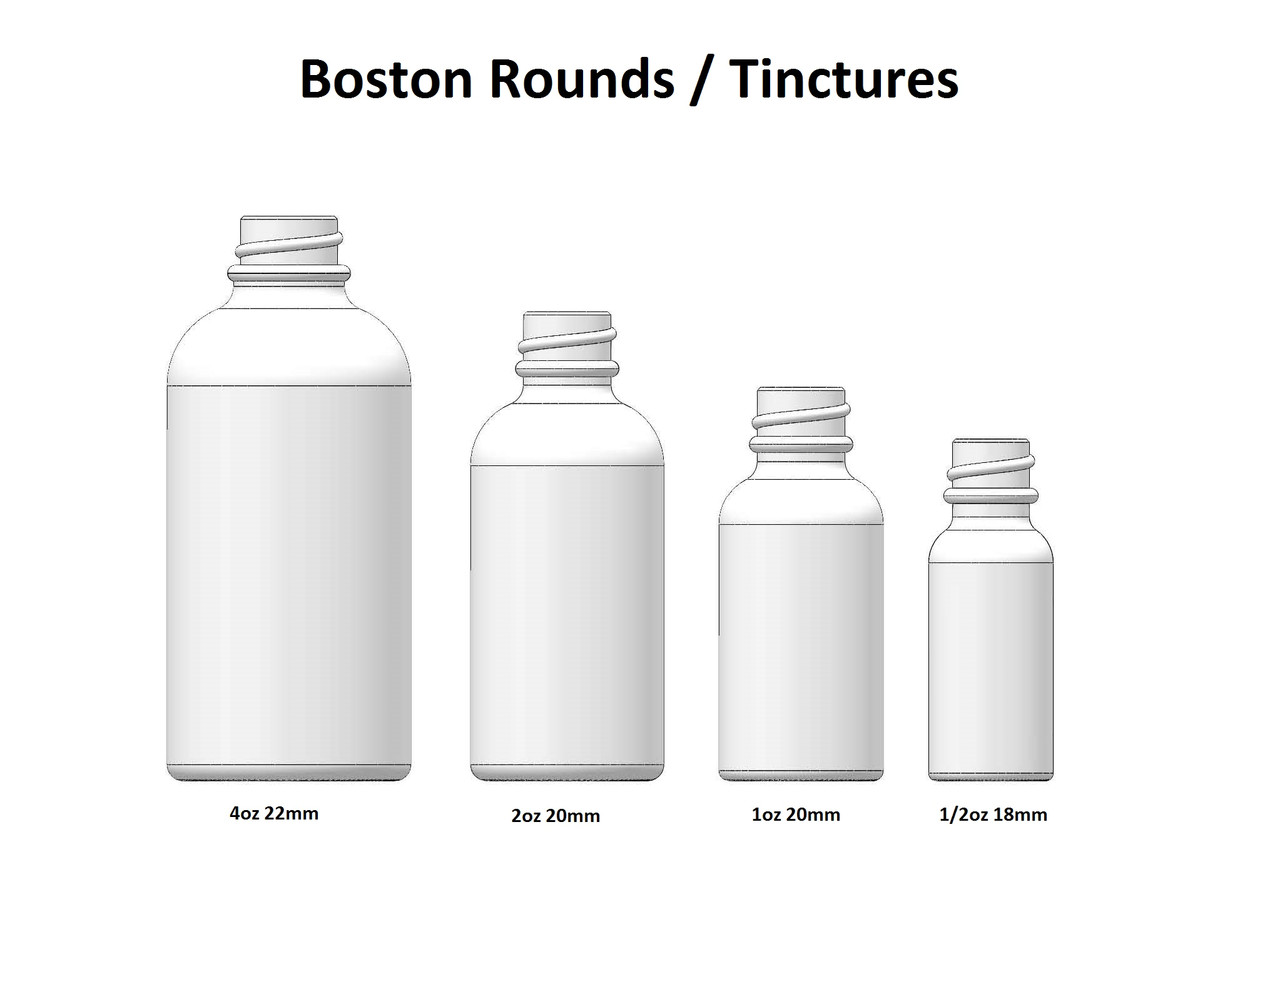 1oz Shiny White Glass Boston Round Bottle 20-400(360/case)